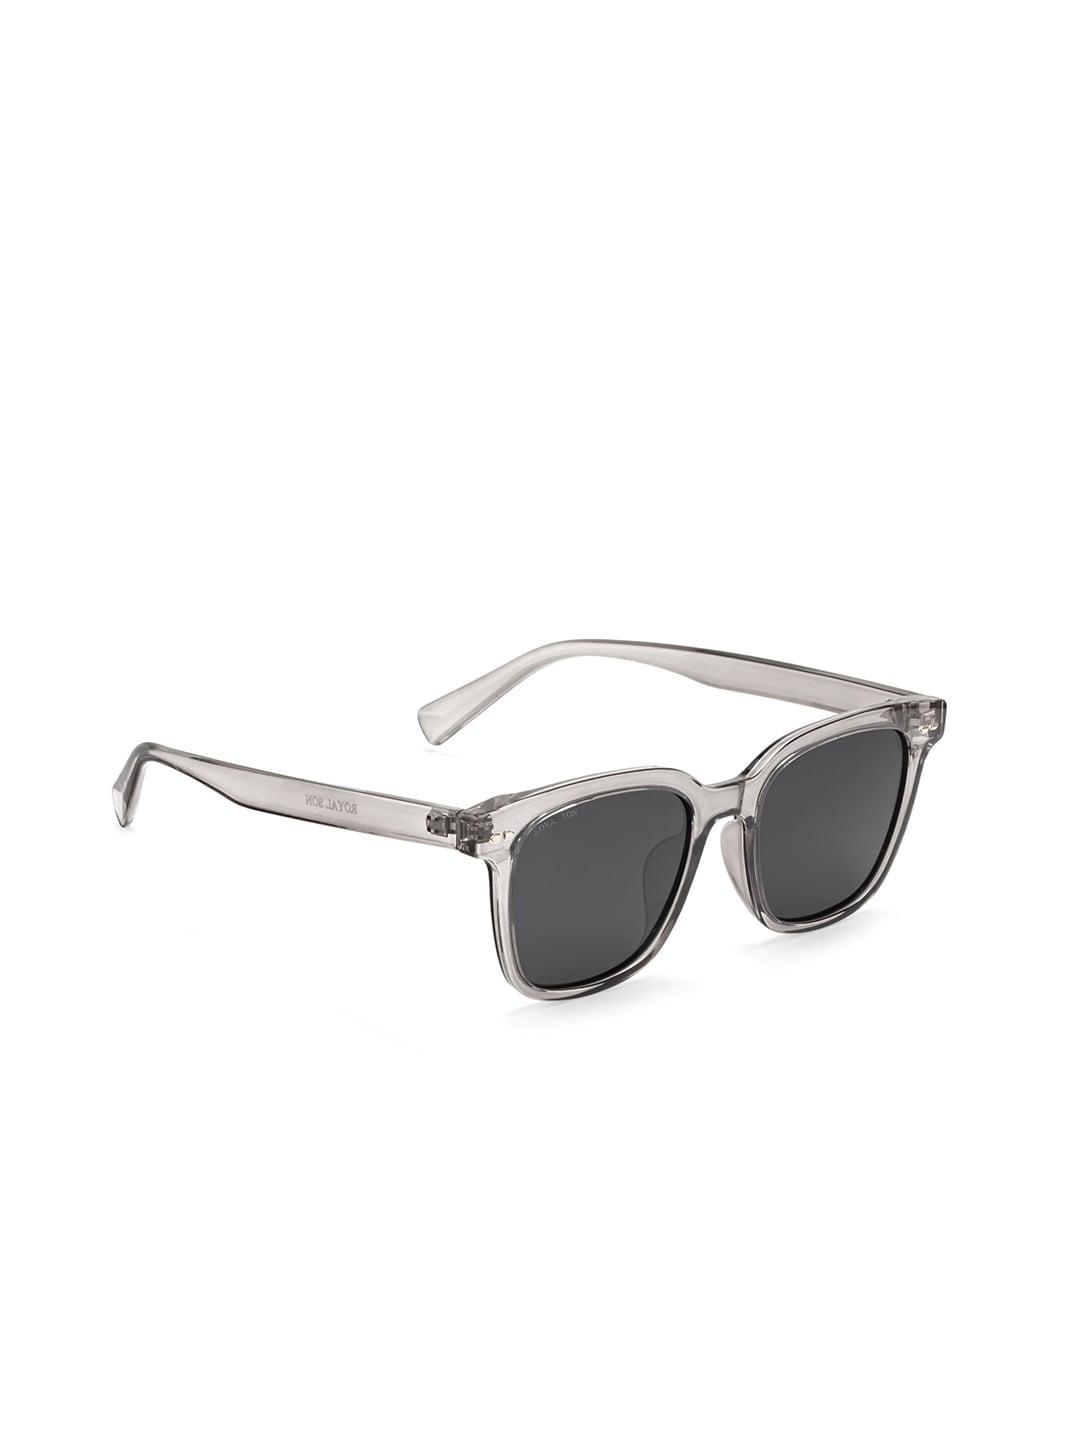 royal son square sunglasses with polarised lens chi00127-c6-r1